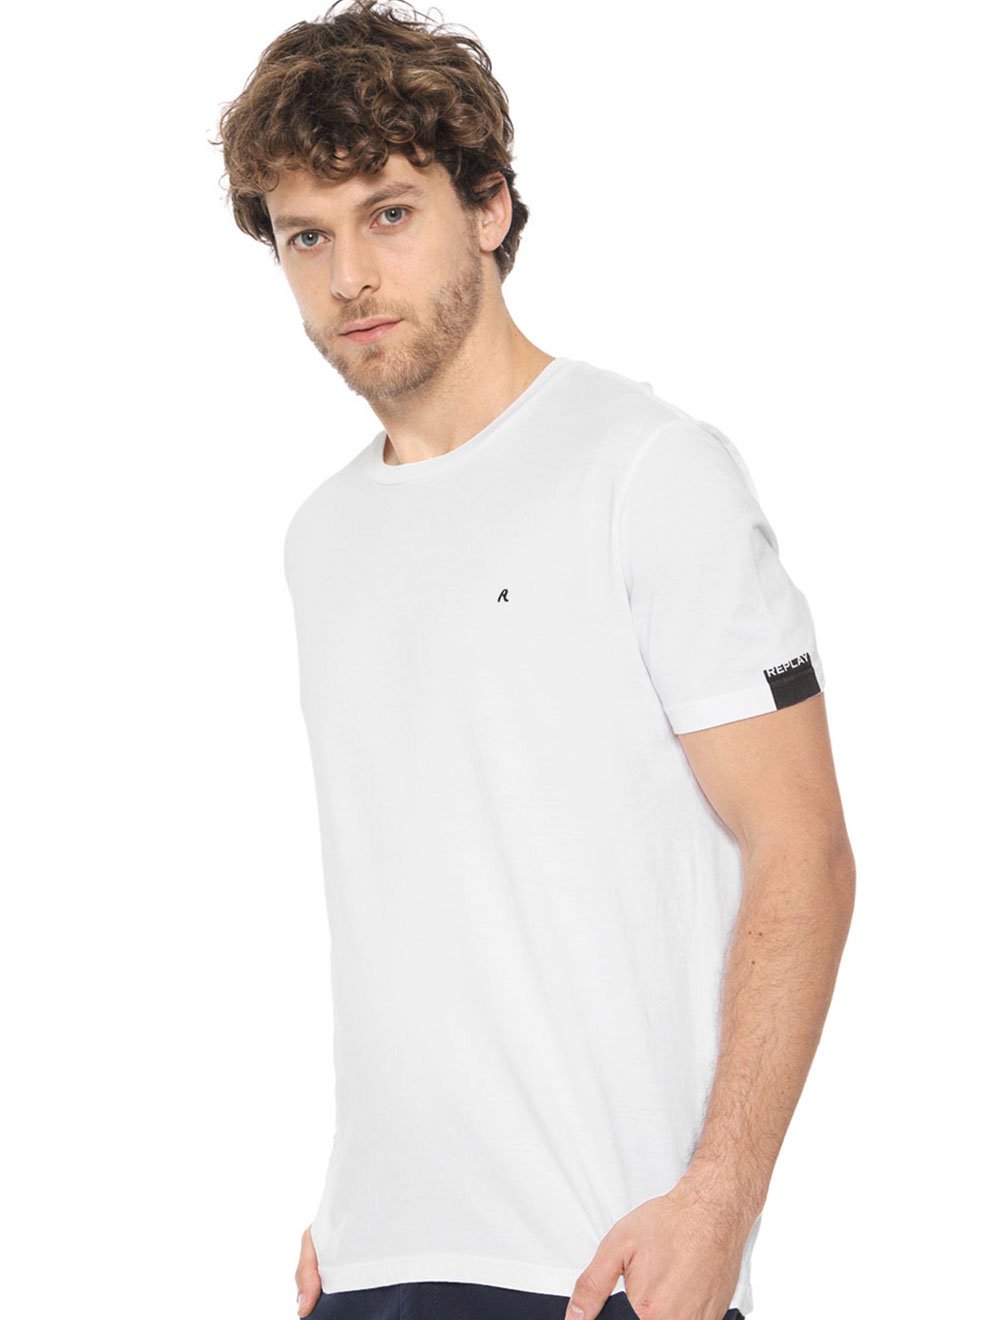 Camiseta Replay Masculina R Basic Branca